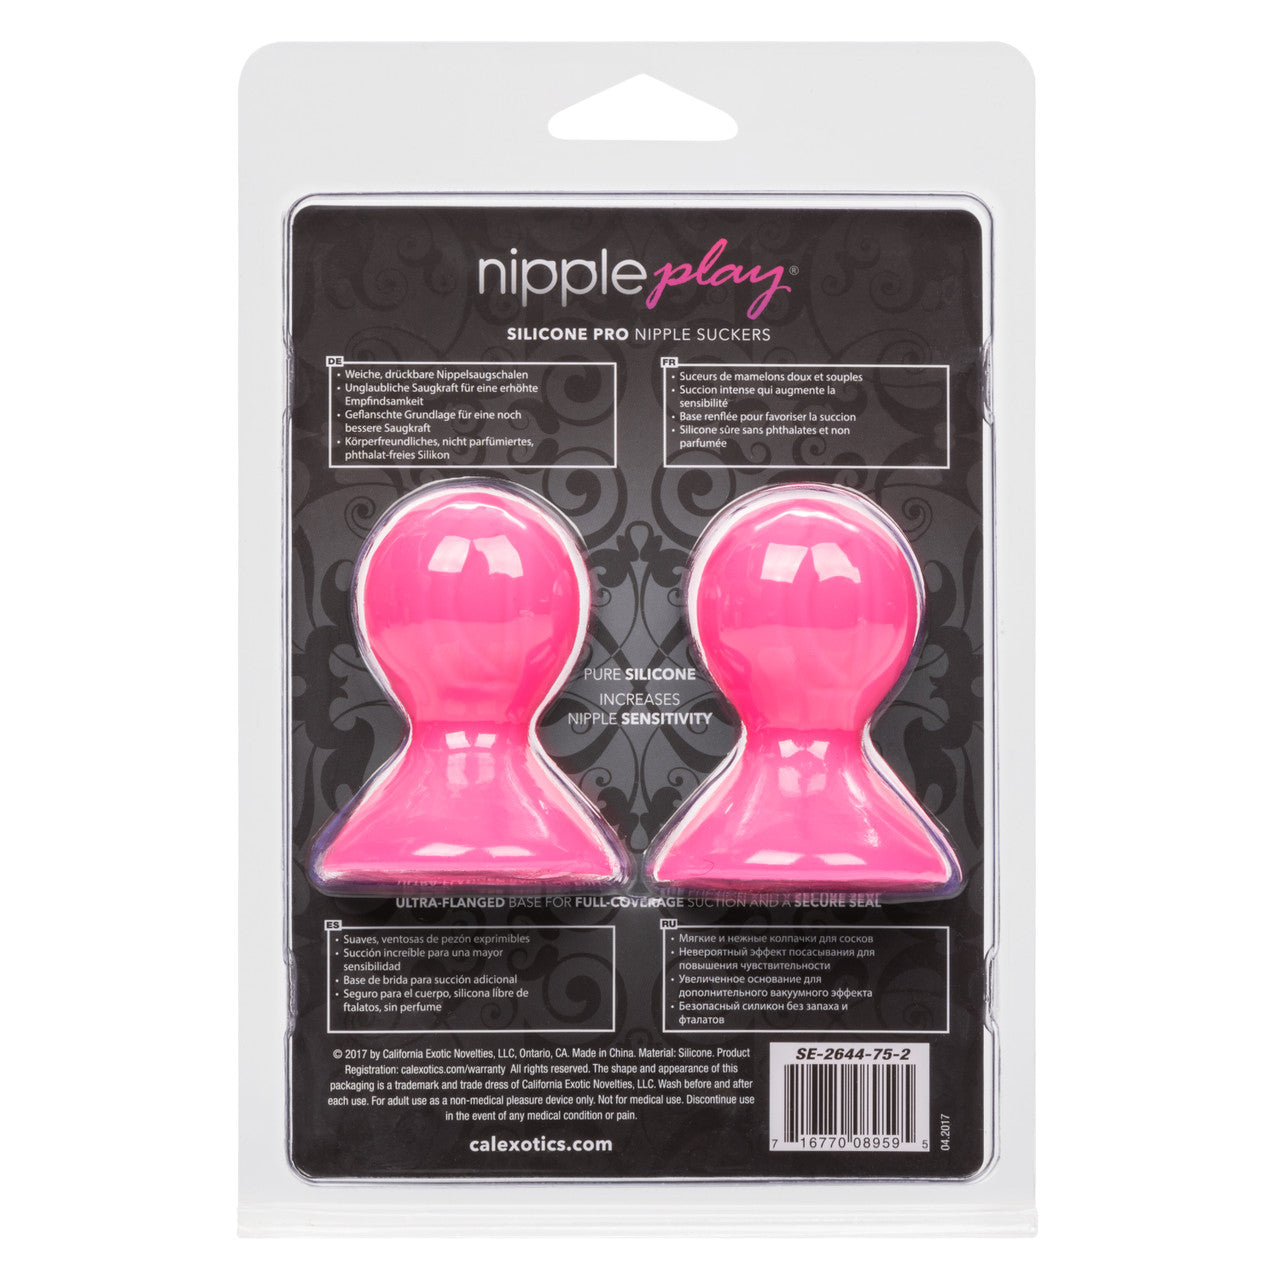 Nipple Play Silicone Pro Nipple Suckers - Pink